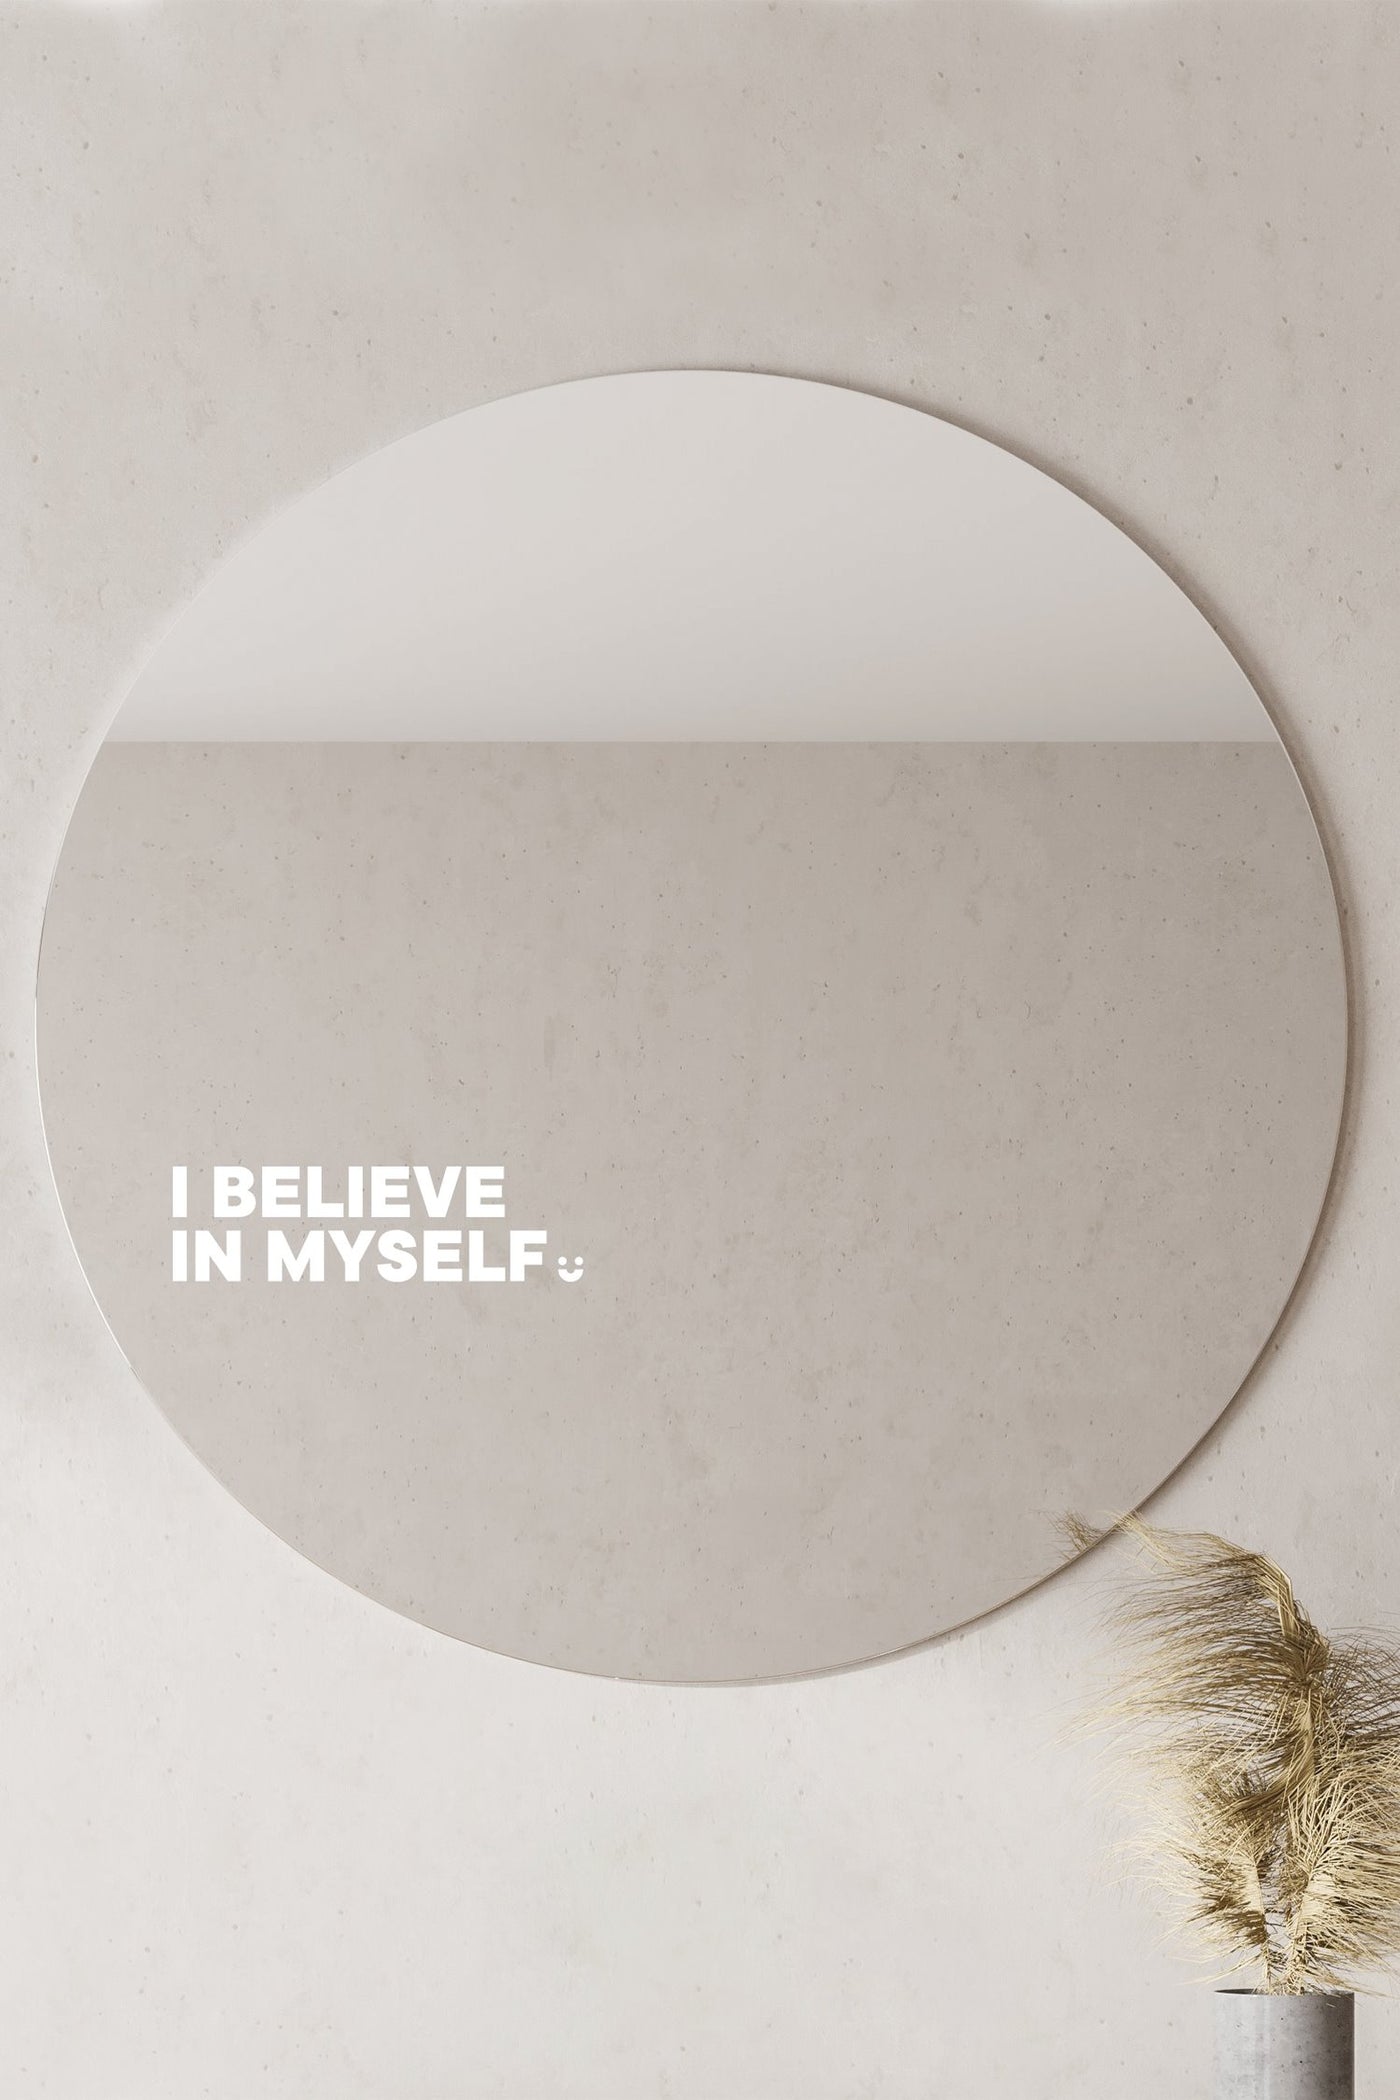 I BELIEVE IN MYSELF. - Affirmation Mirror Sticker Affirmation Stickers Selfawear 